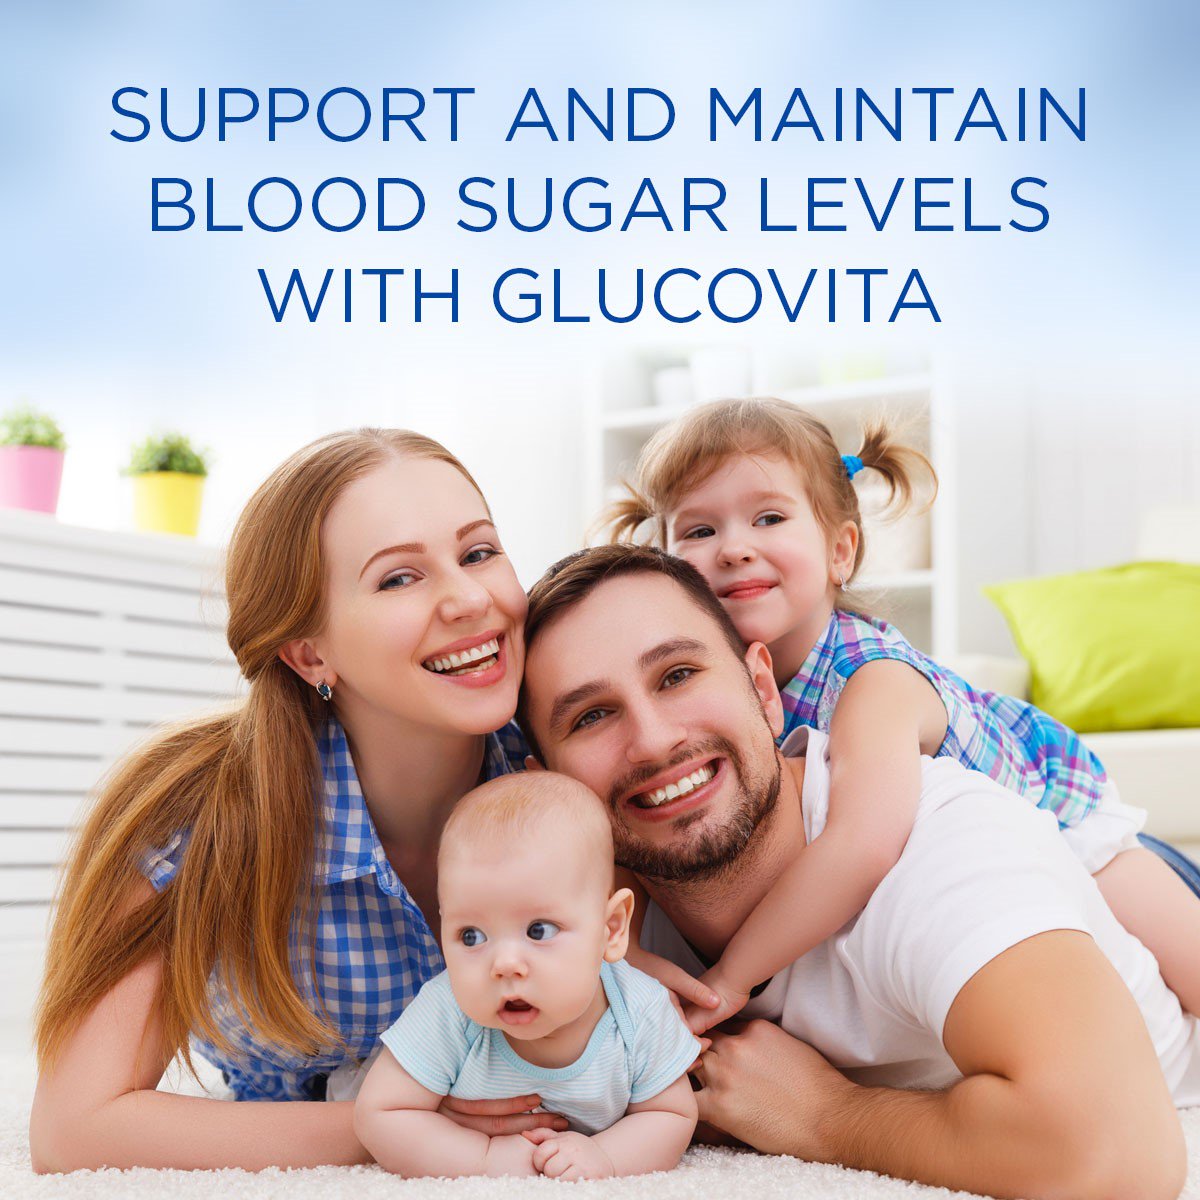 Having blood sugar level issues? We're here to help! #glucoselevels #glucosetest #glucose #bloodsugar #bloodsugardiet #nutrientbalance #healthybloodsugar #botanicalextracts